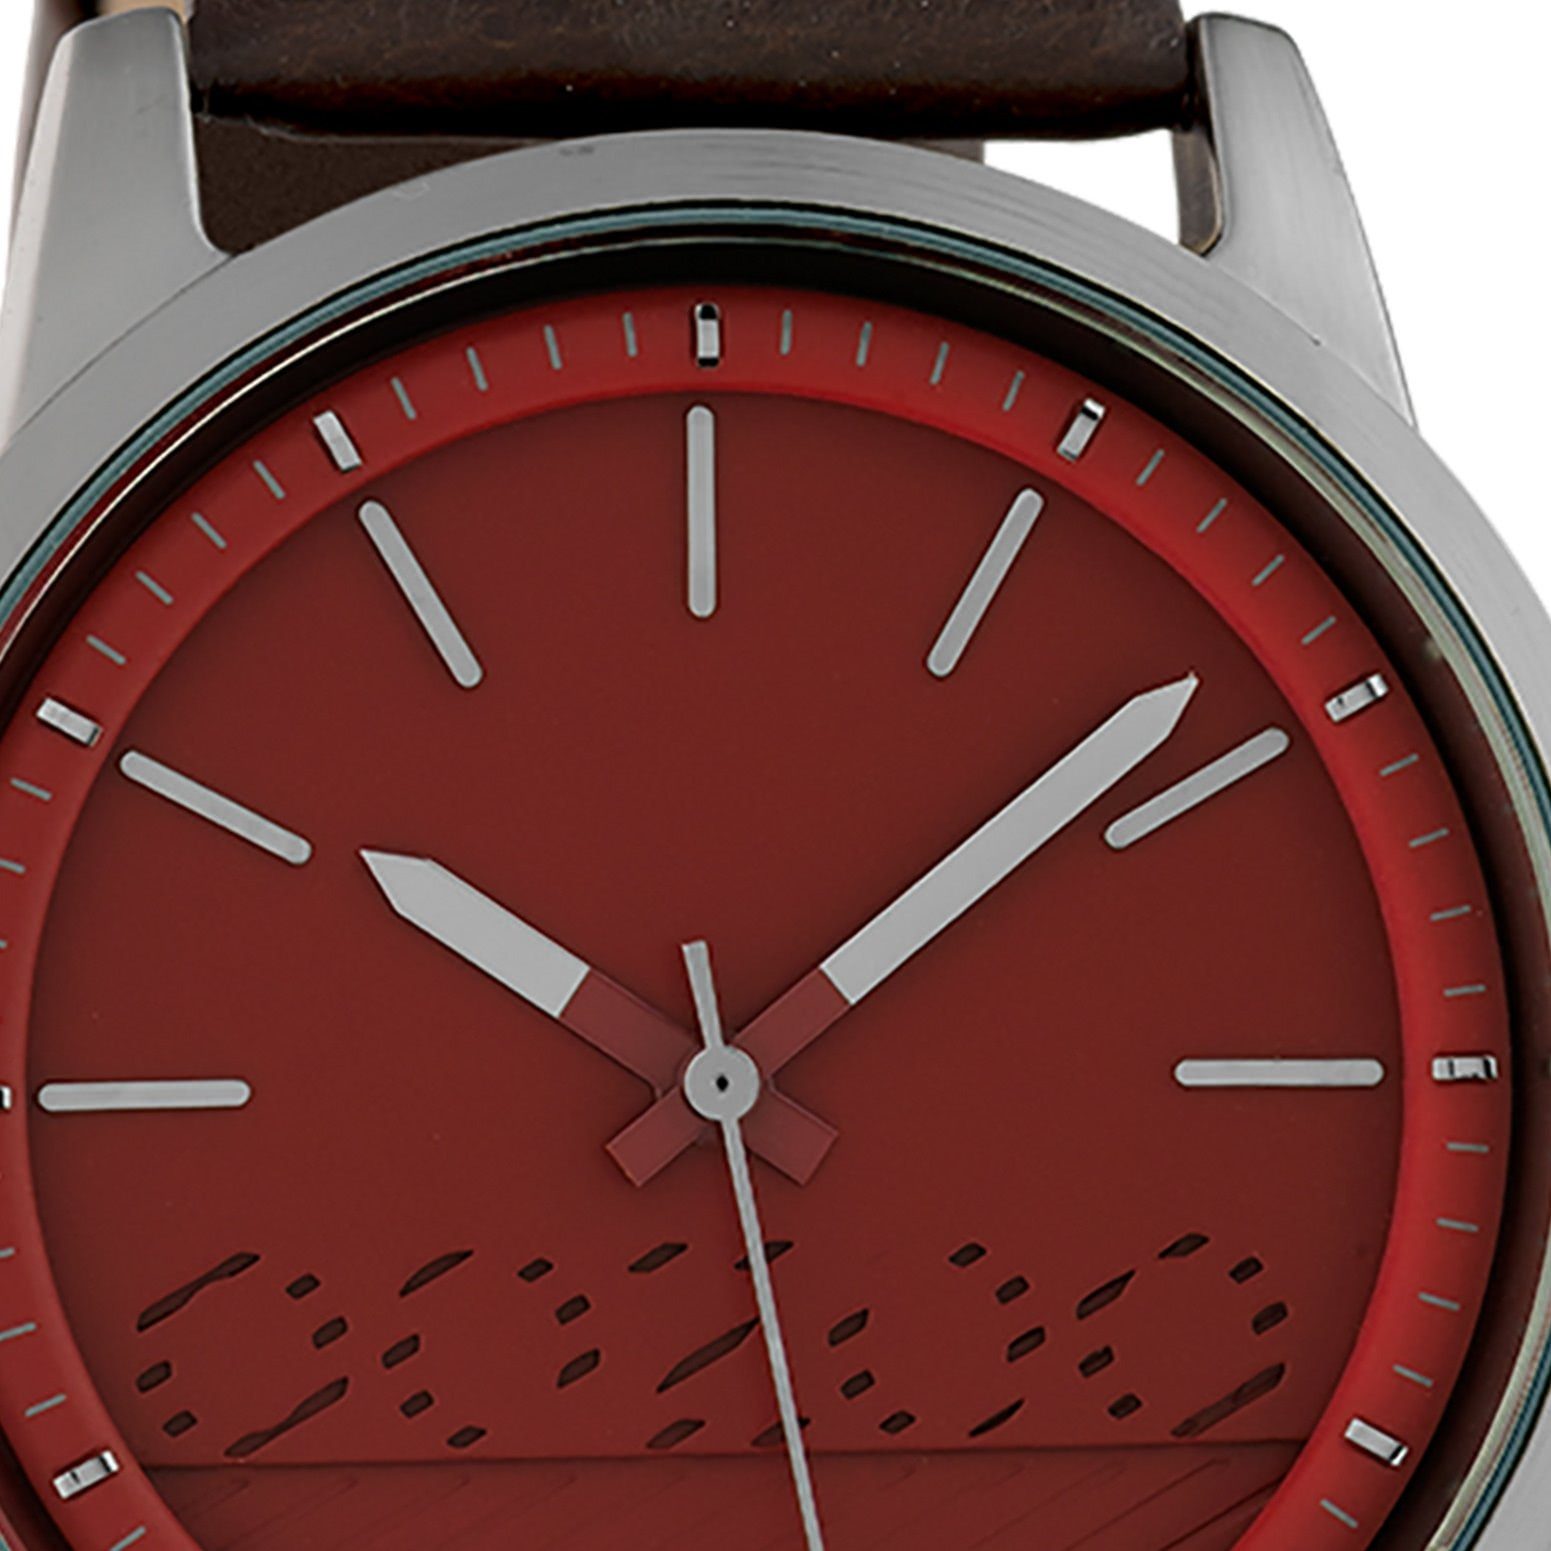 Quarzuhr Timepieces, groß Fashion Lederarmband (ca. OOZOO Damen braun, rund, Armbanduhr Oozoo Damenuhr 45mm), OOZOO